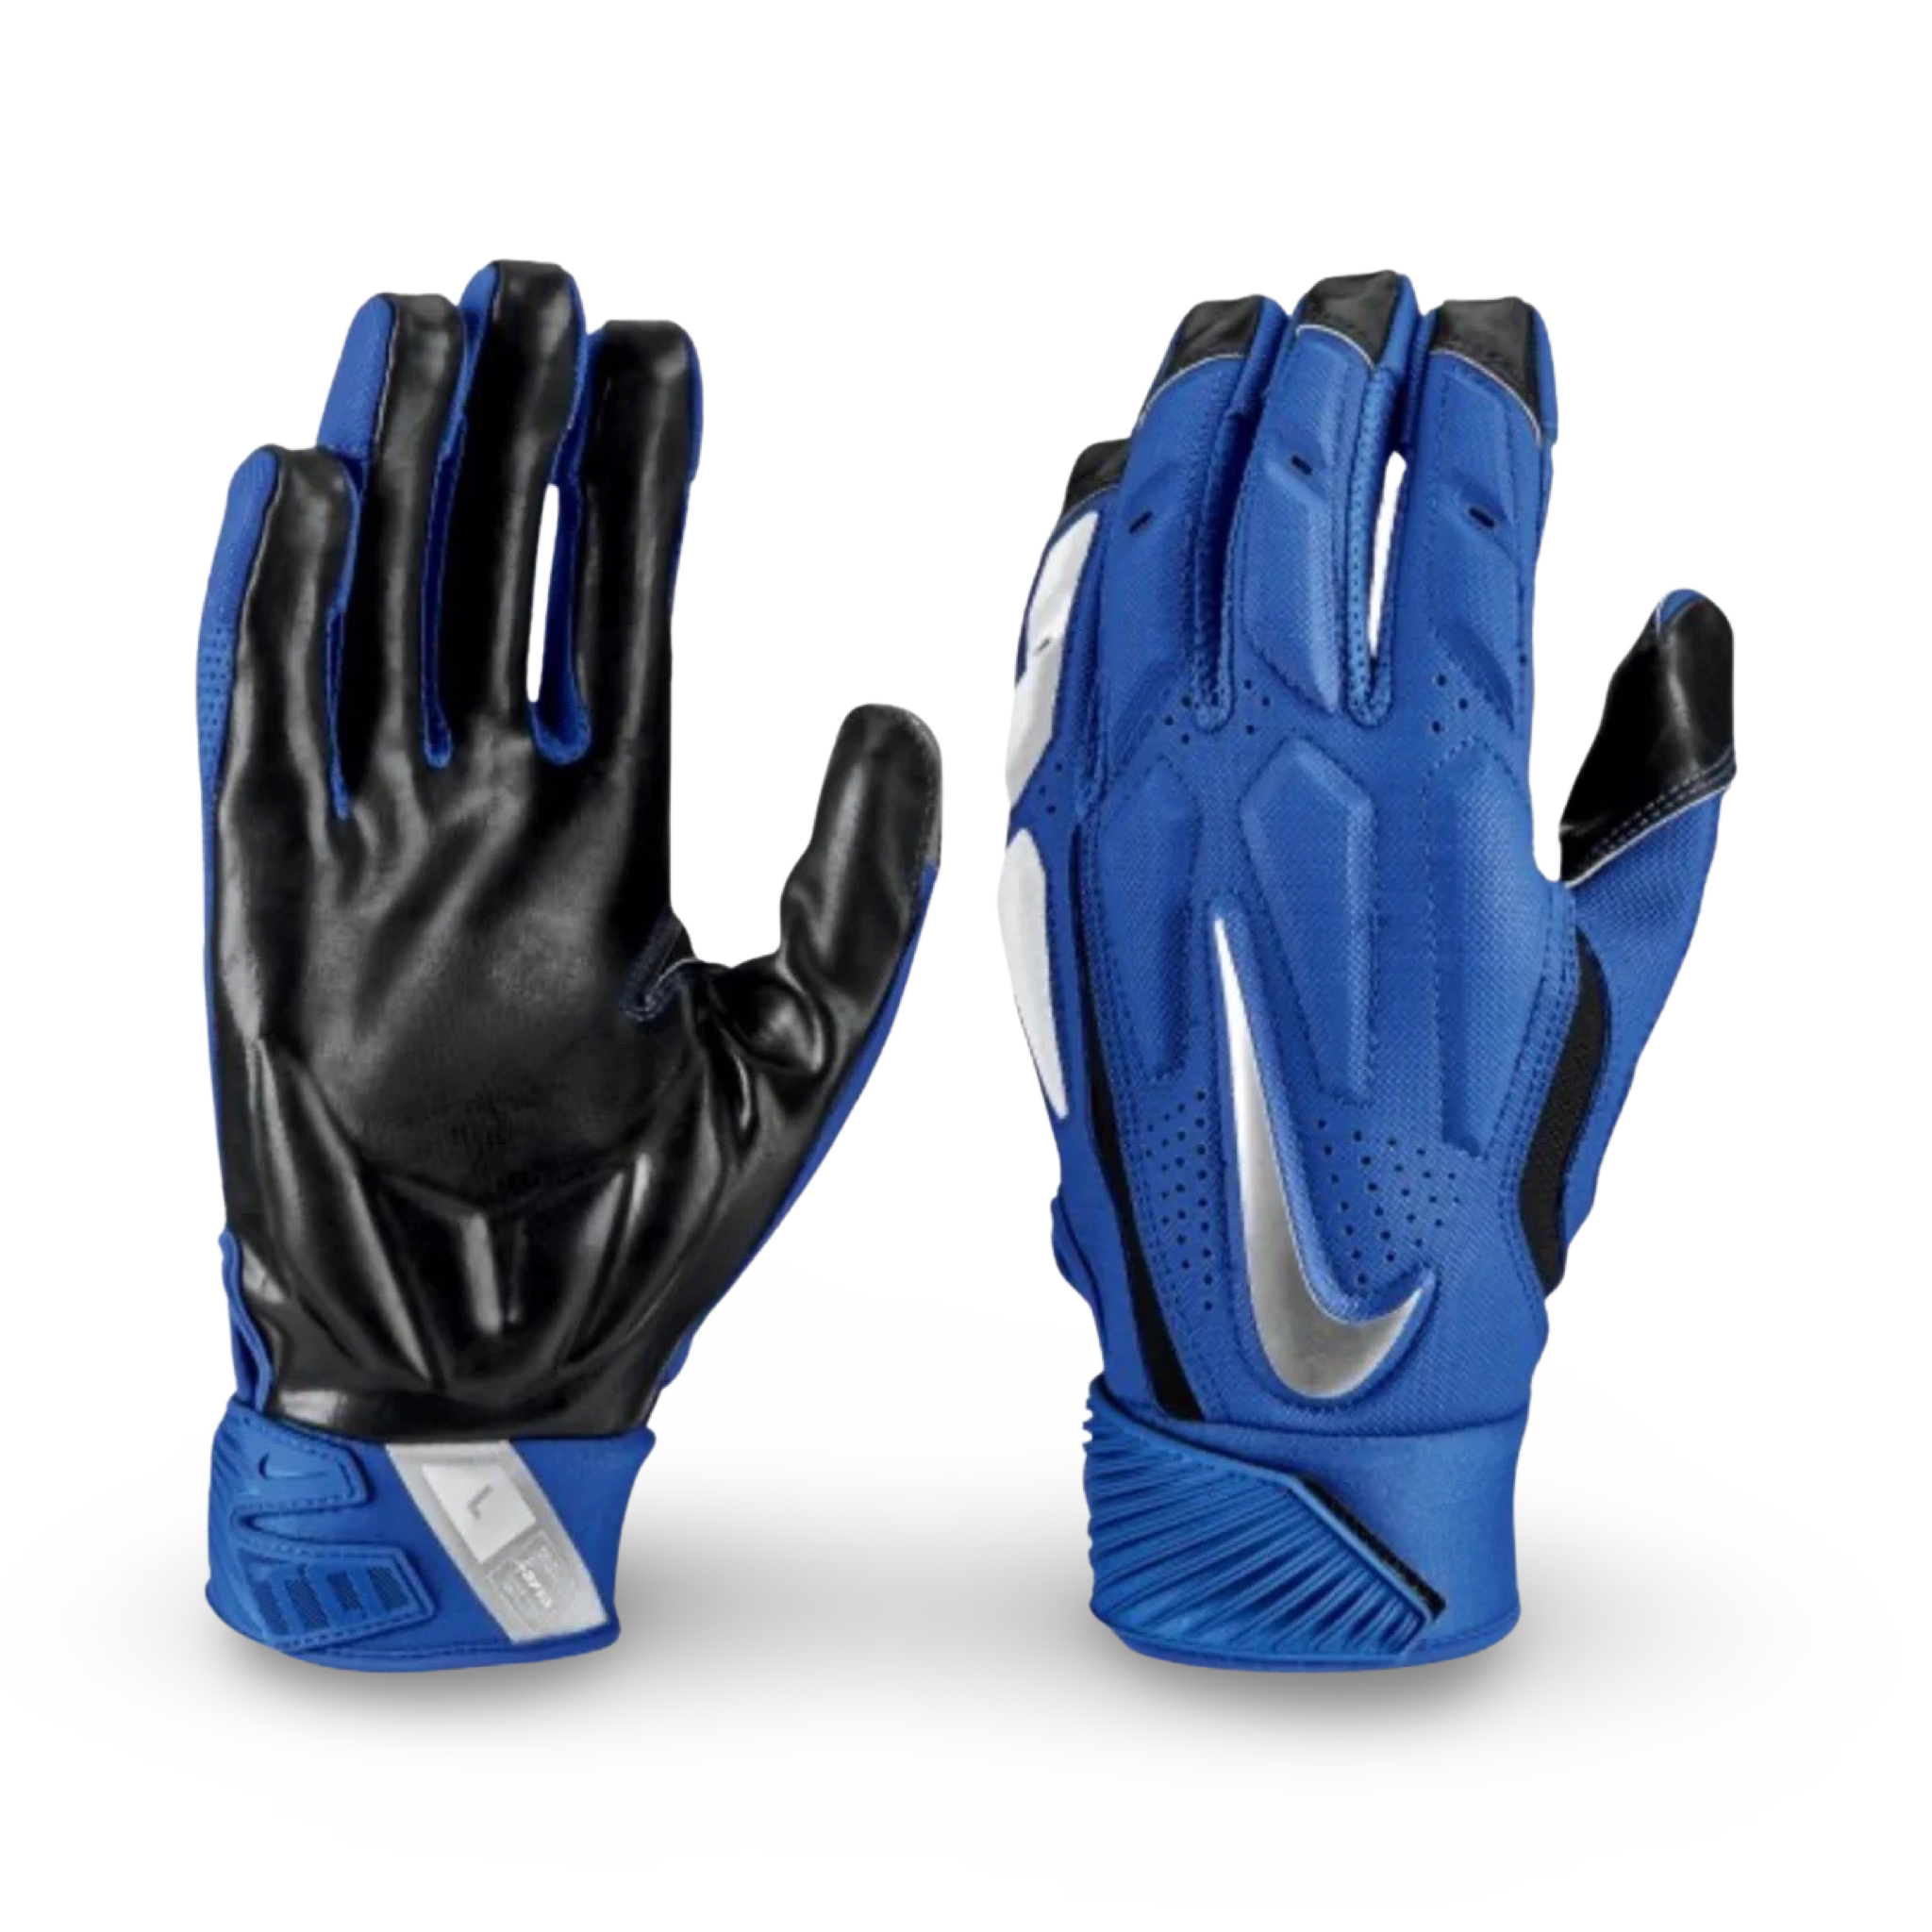 Nike Men’s D-Tack 6.0 Lineman Football Gloves